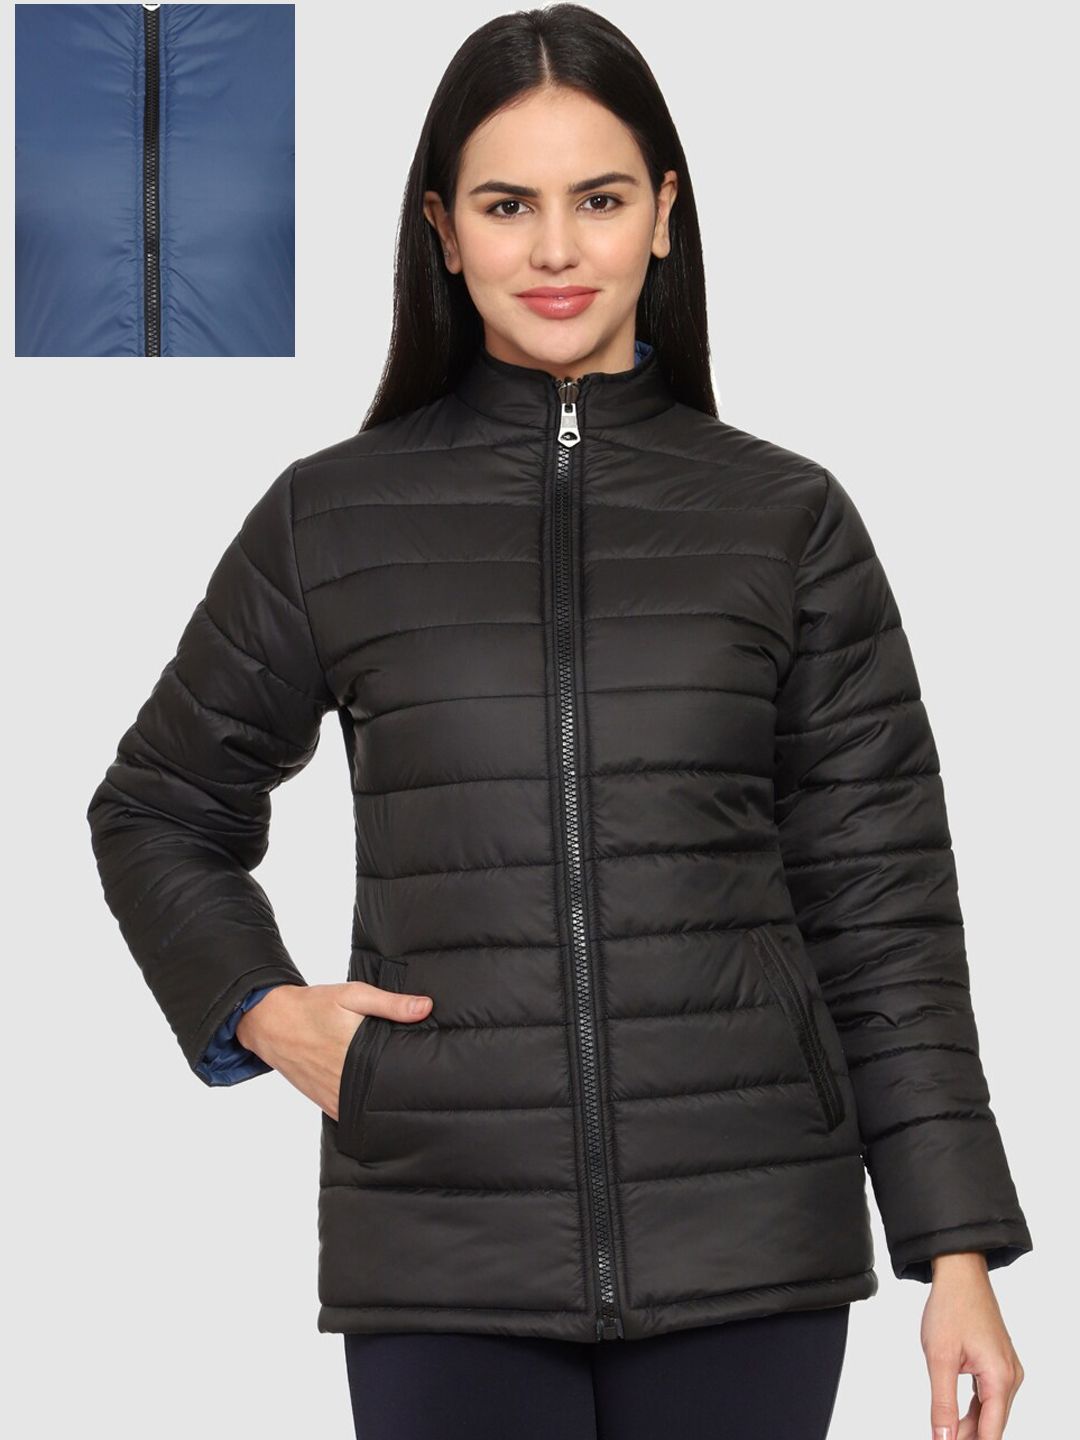 CL SPORT Women Black & Blue Reversible Puffer Jacket Price in India